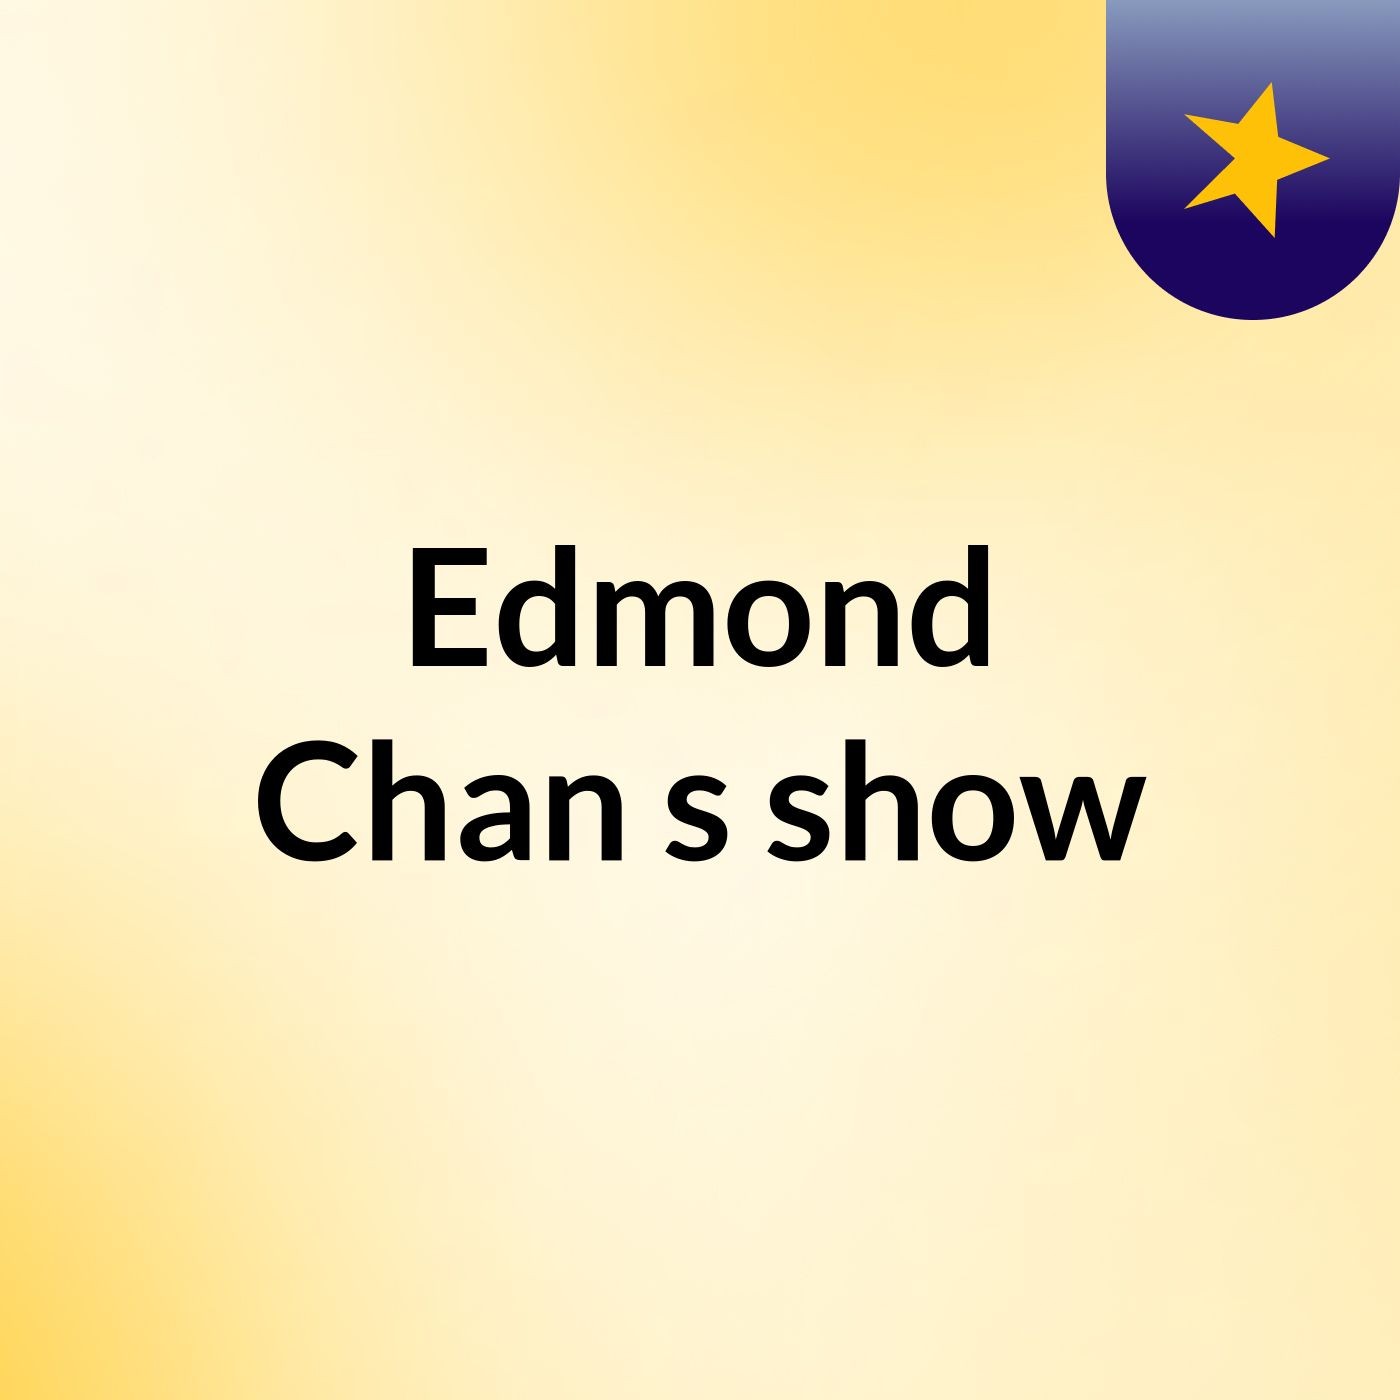 Edmond Chan's show